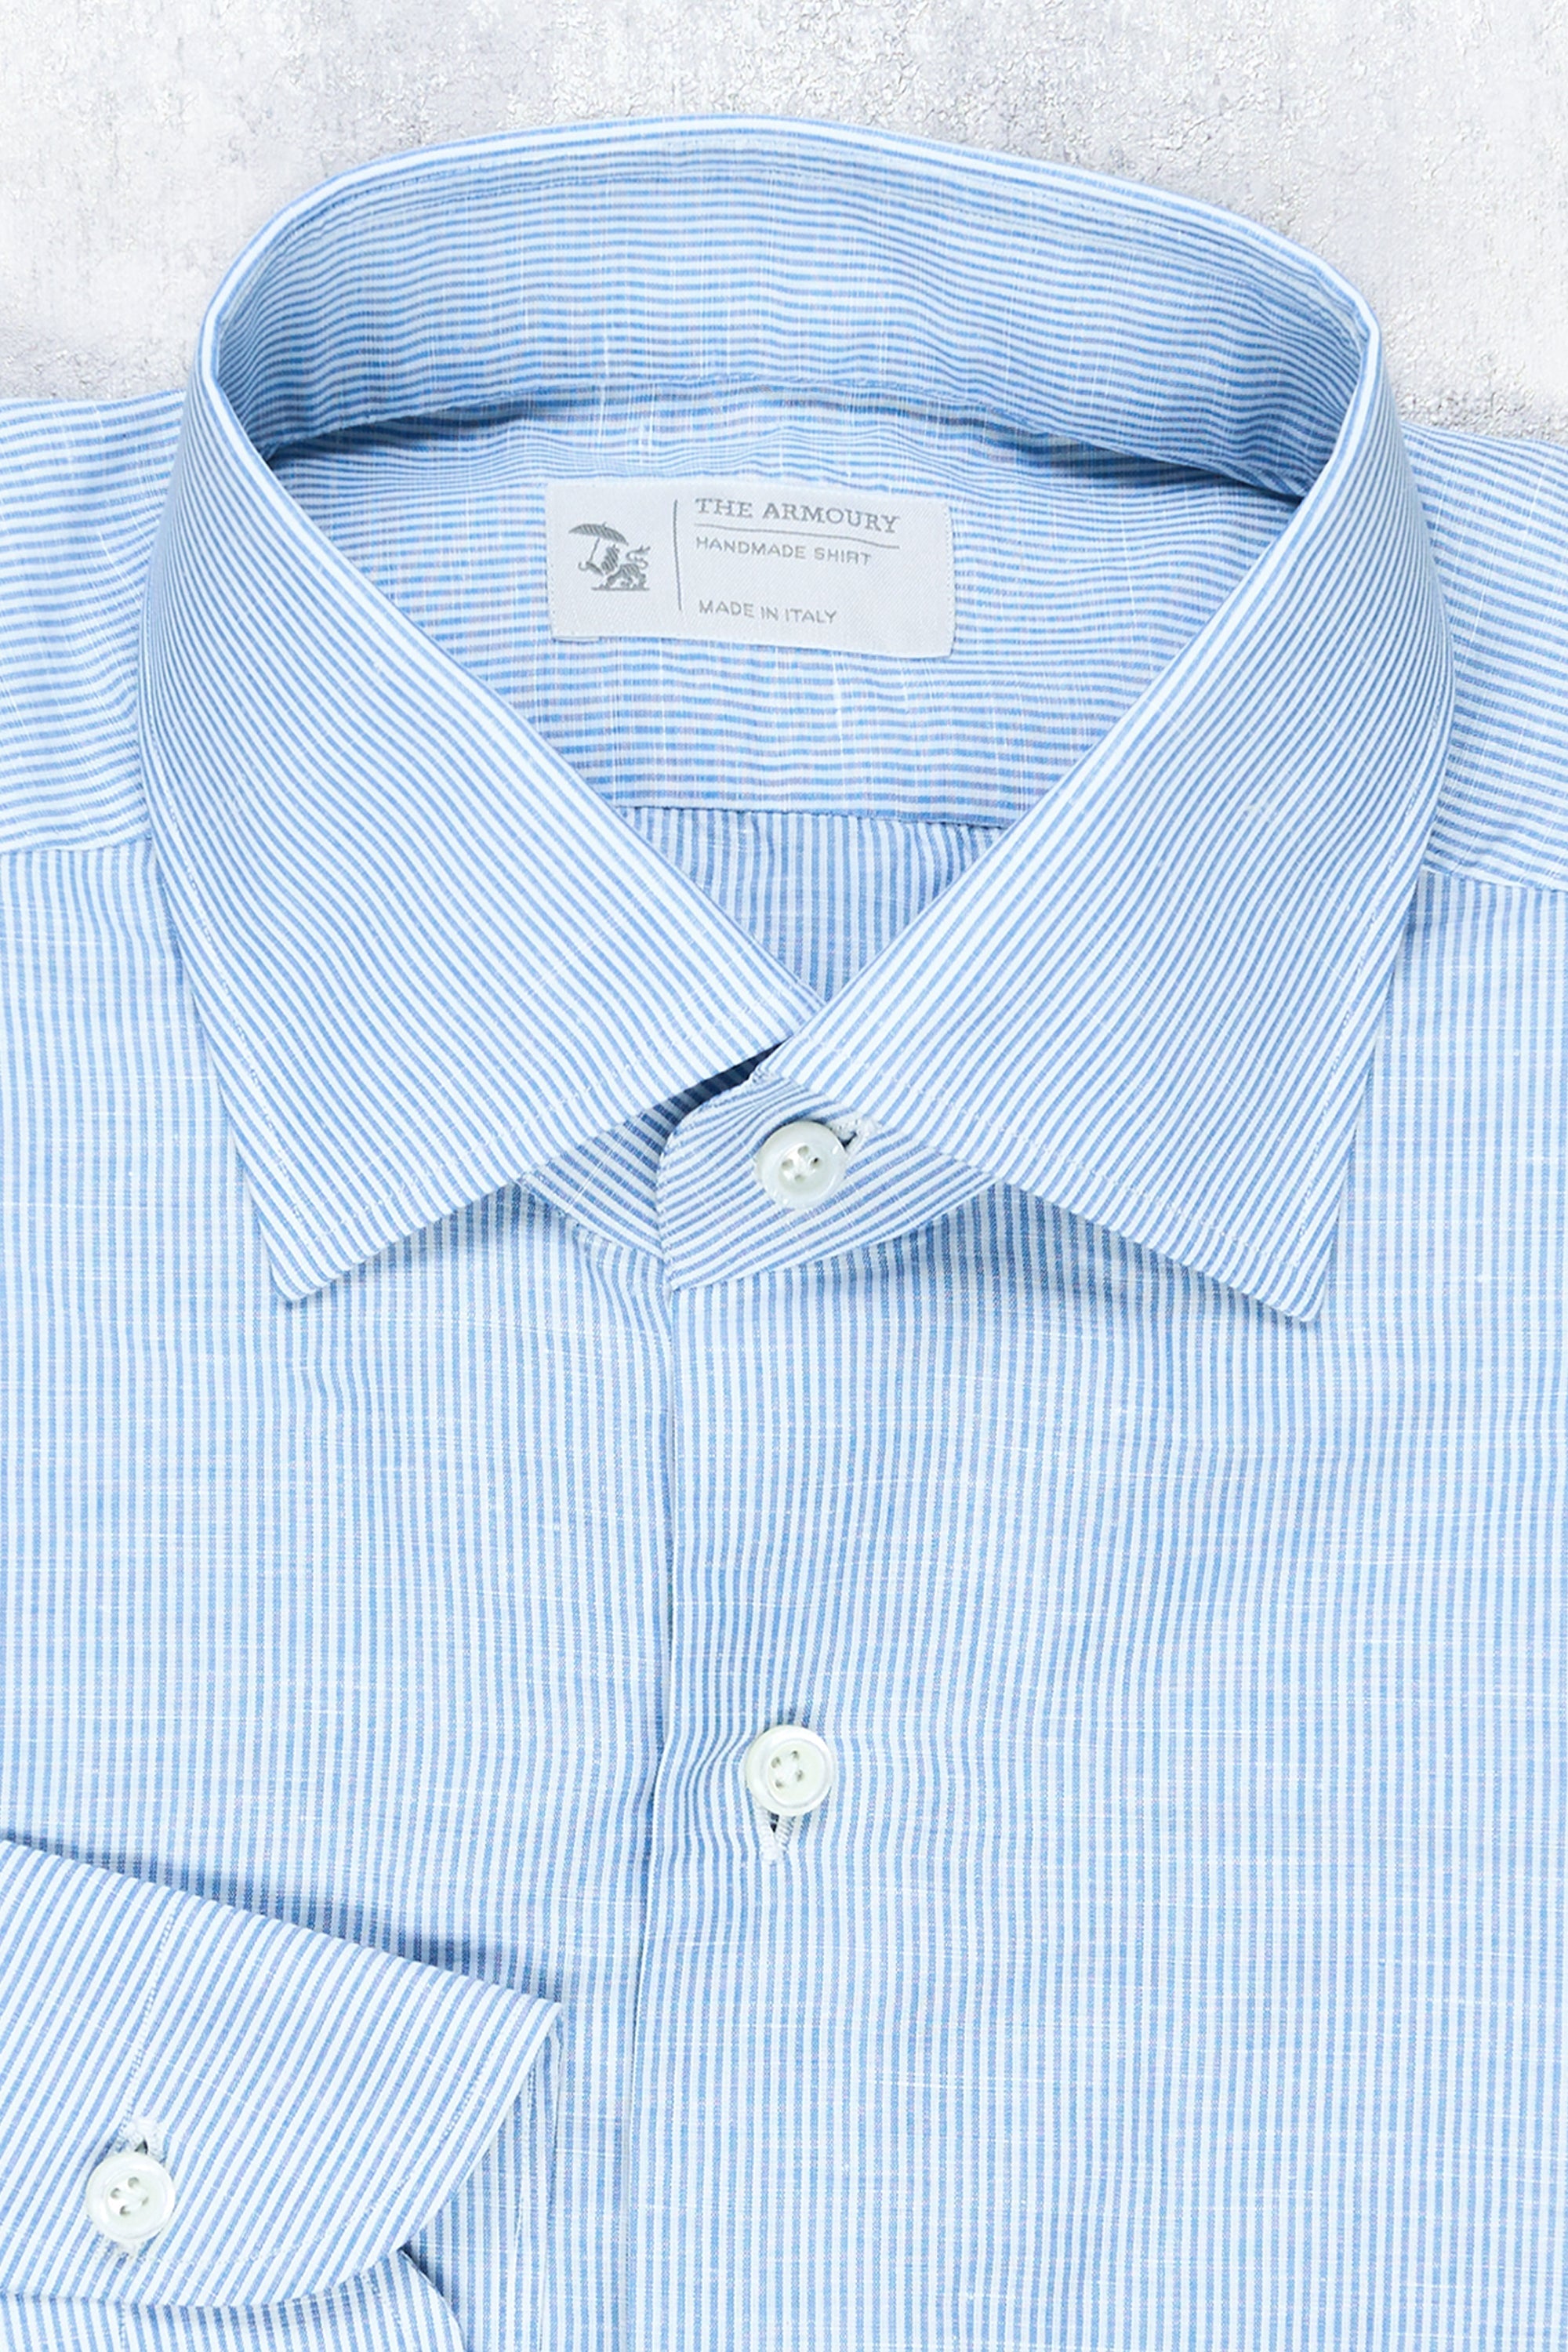 The Armoury Blue/White Stripe Cotton Spread Collar Shirt MTM